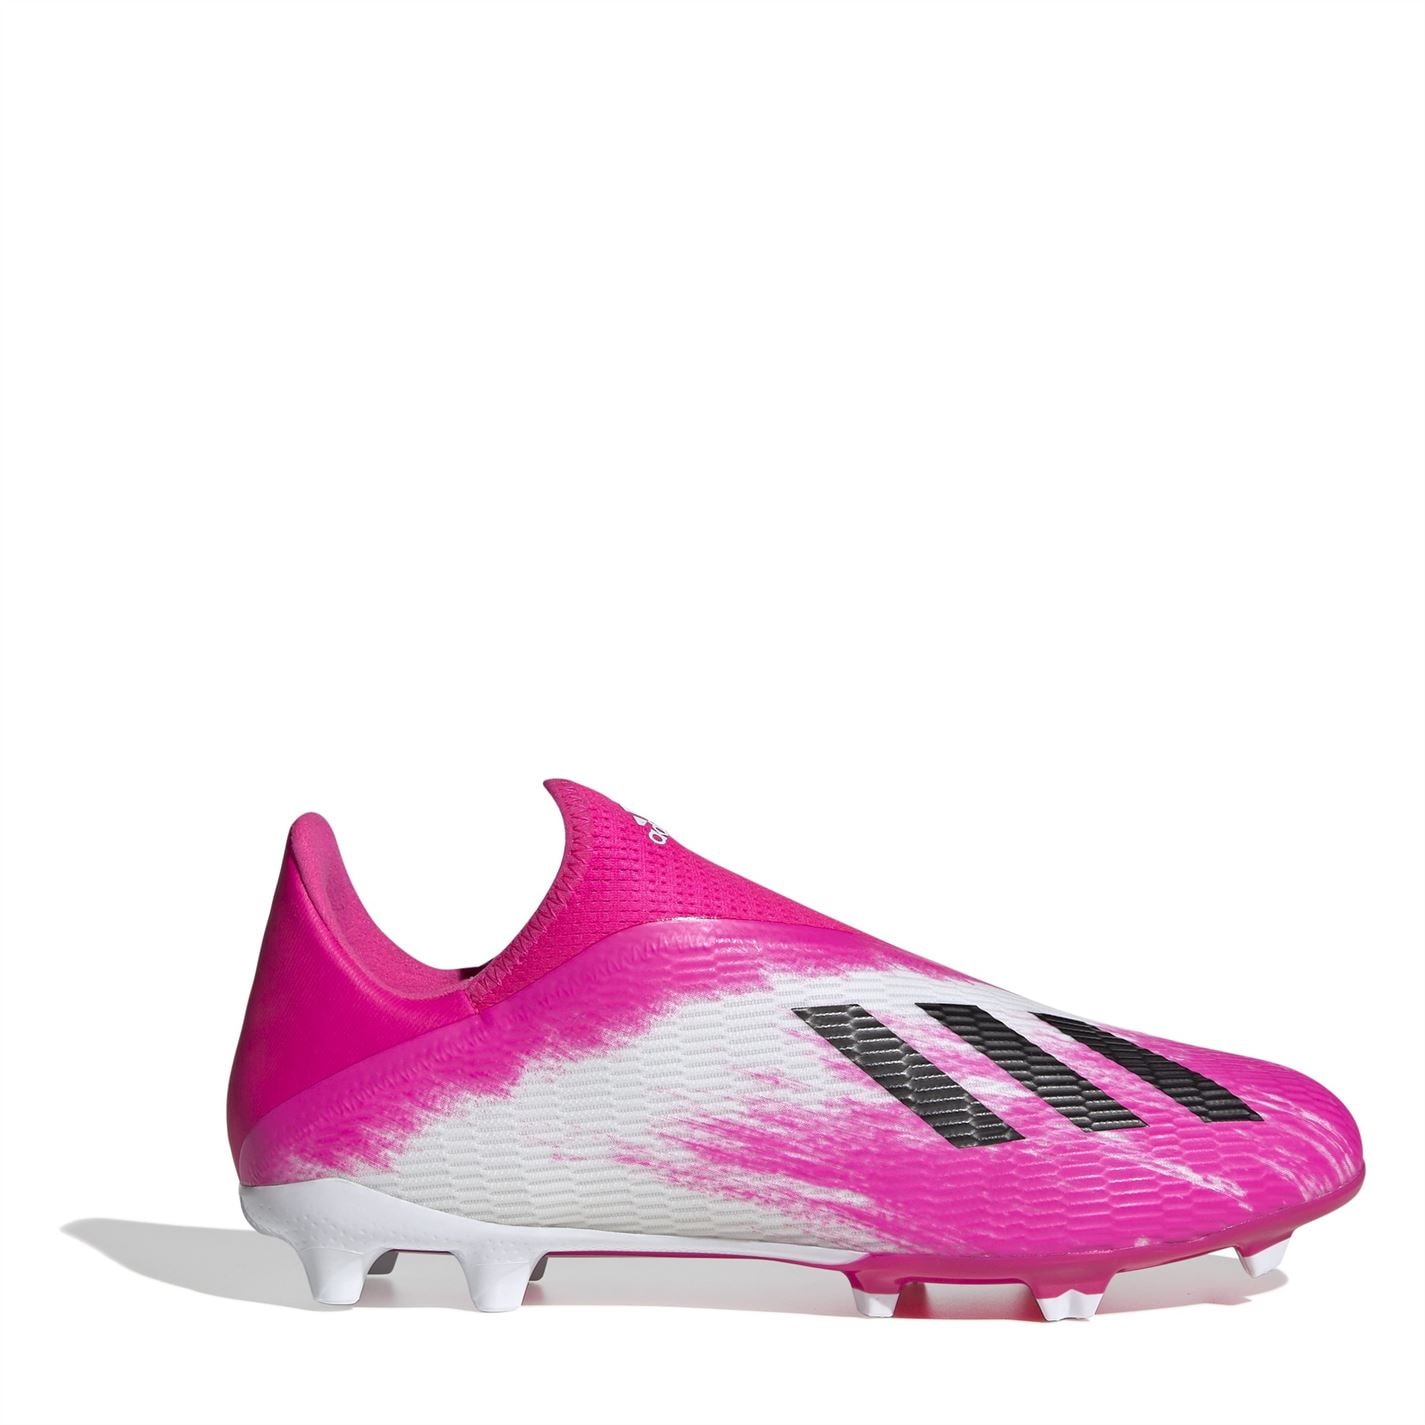 Ghete fotbal sala adidas X 19.3 fotbal Firm Ground alb roz